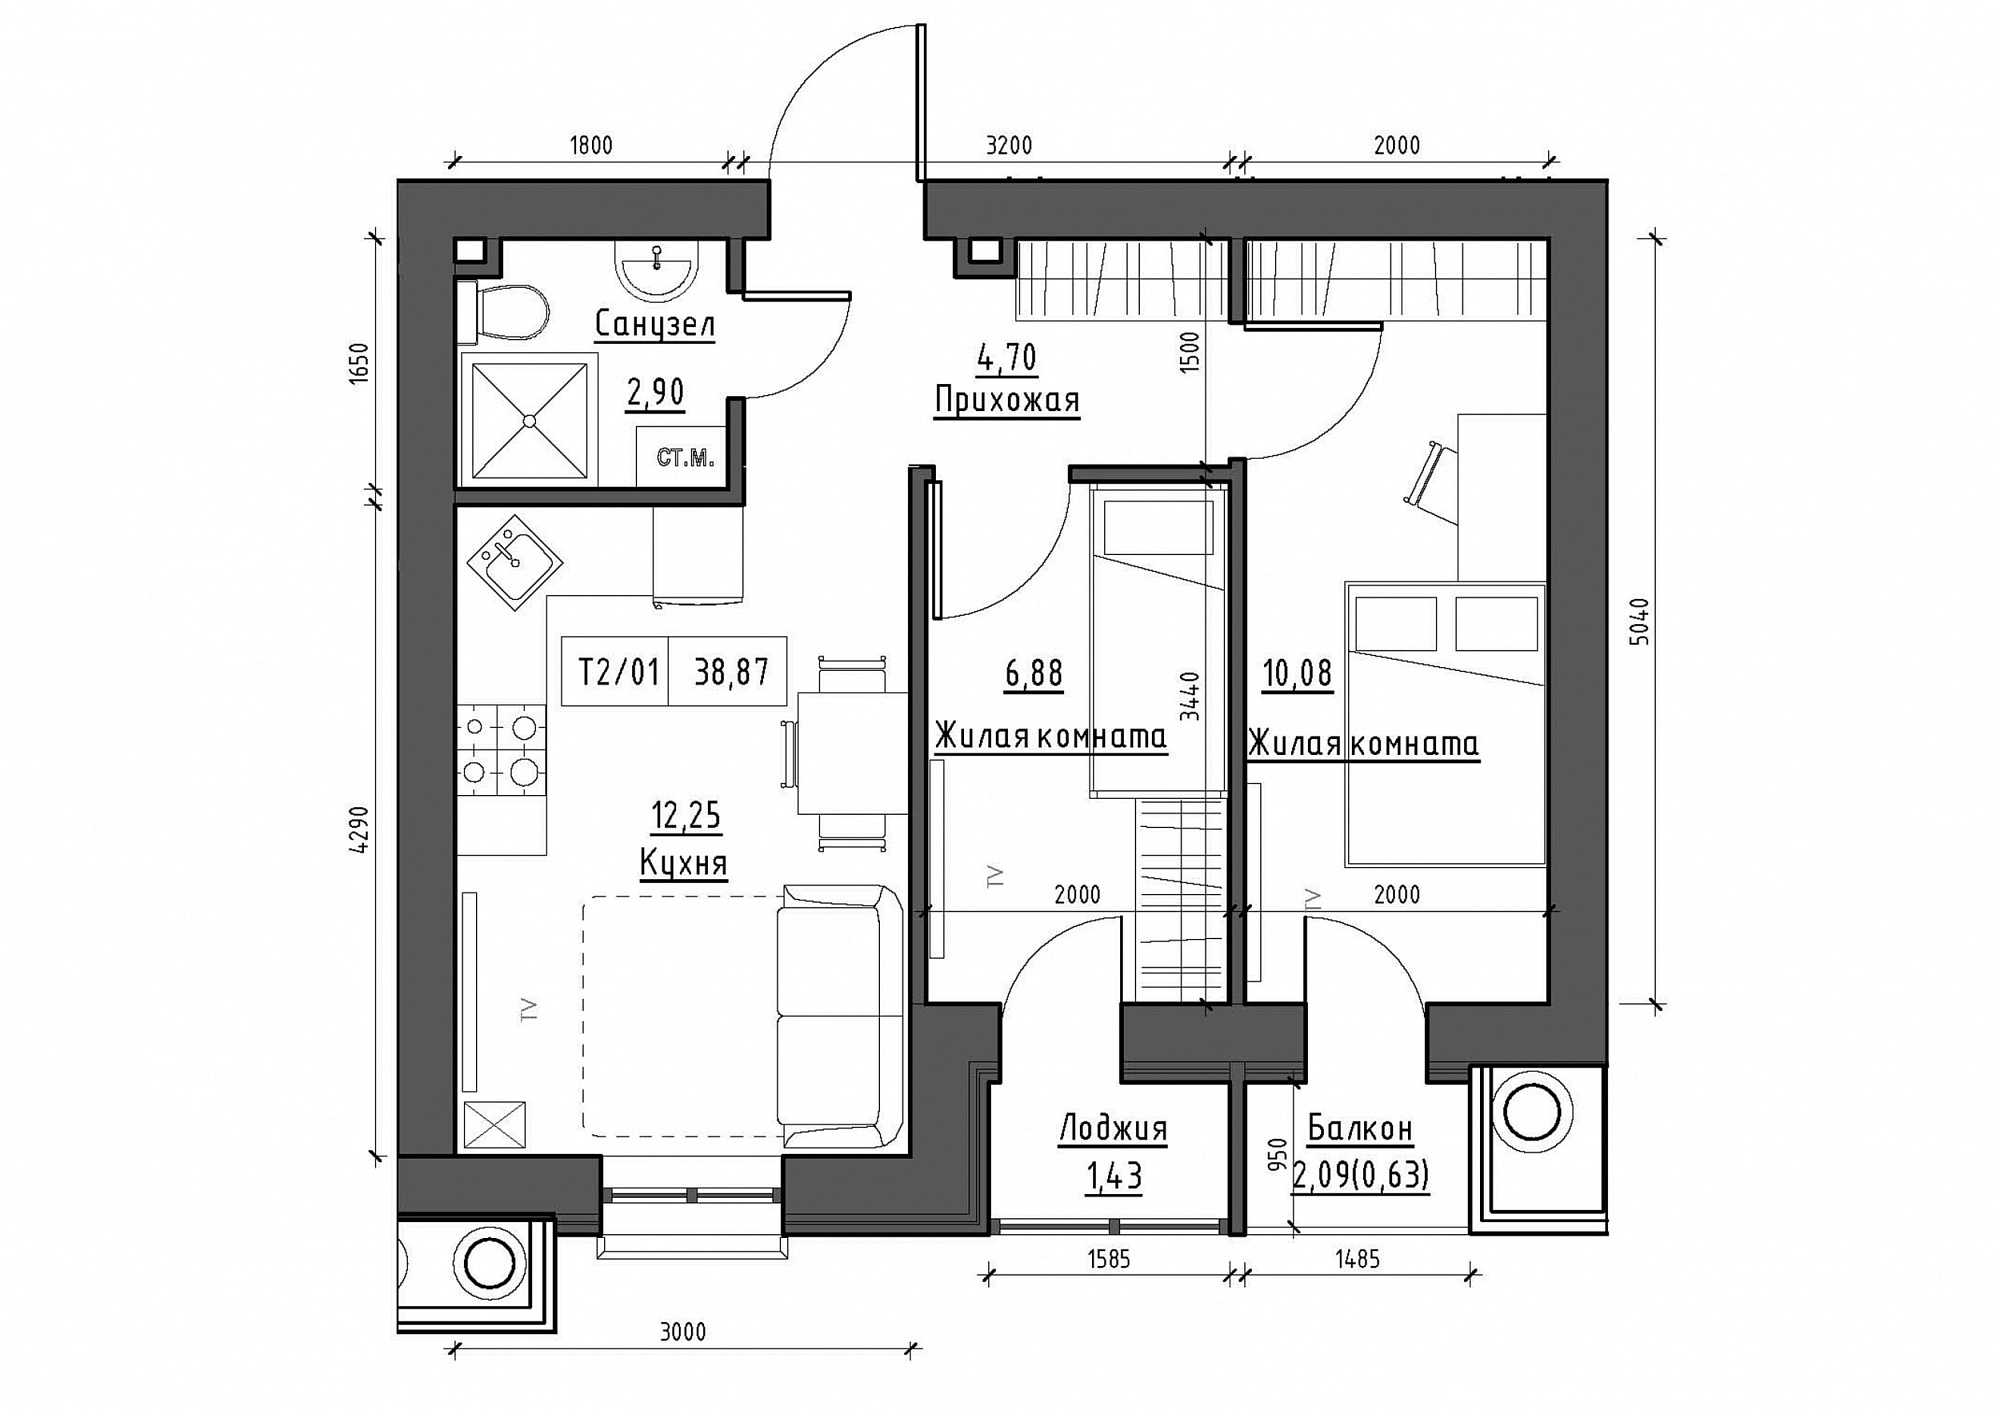 Planning 2-rm flats area 38.87m2, KS-012-04/0005.